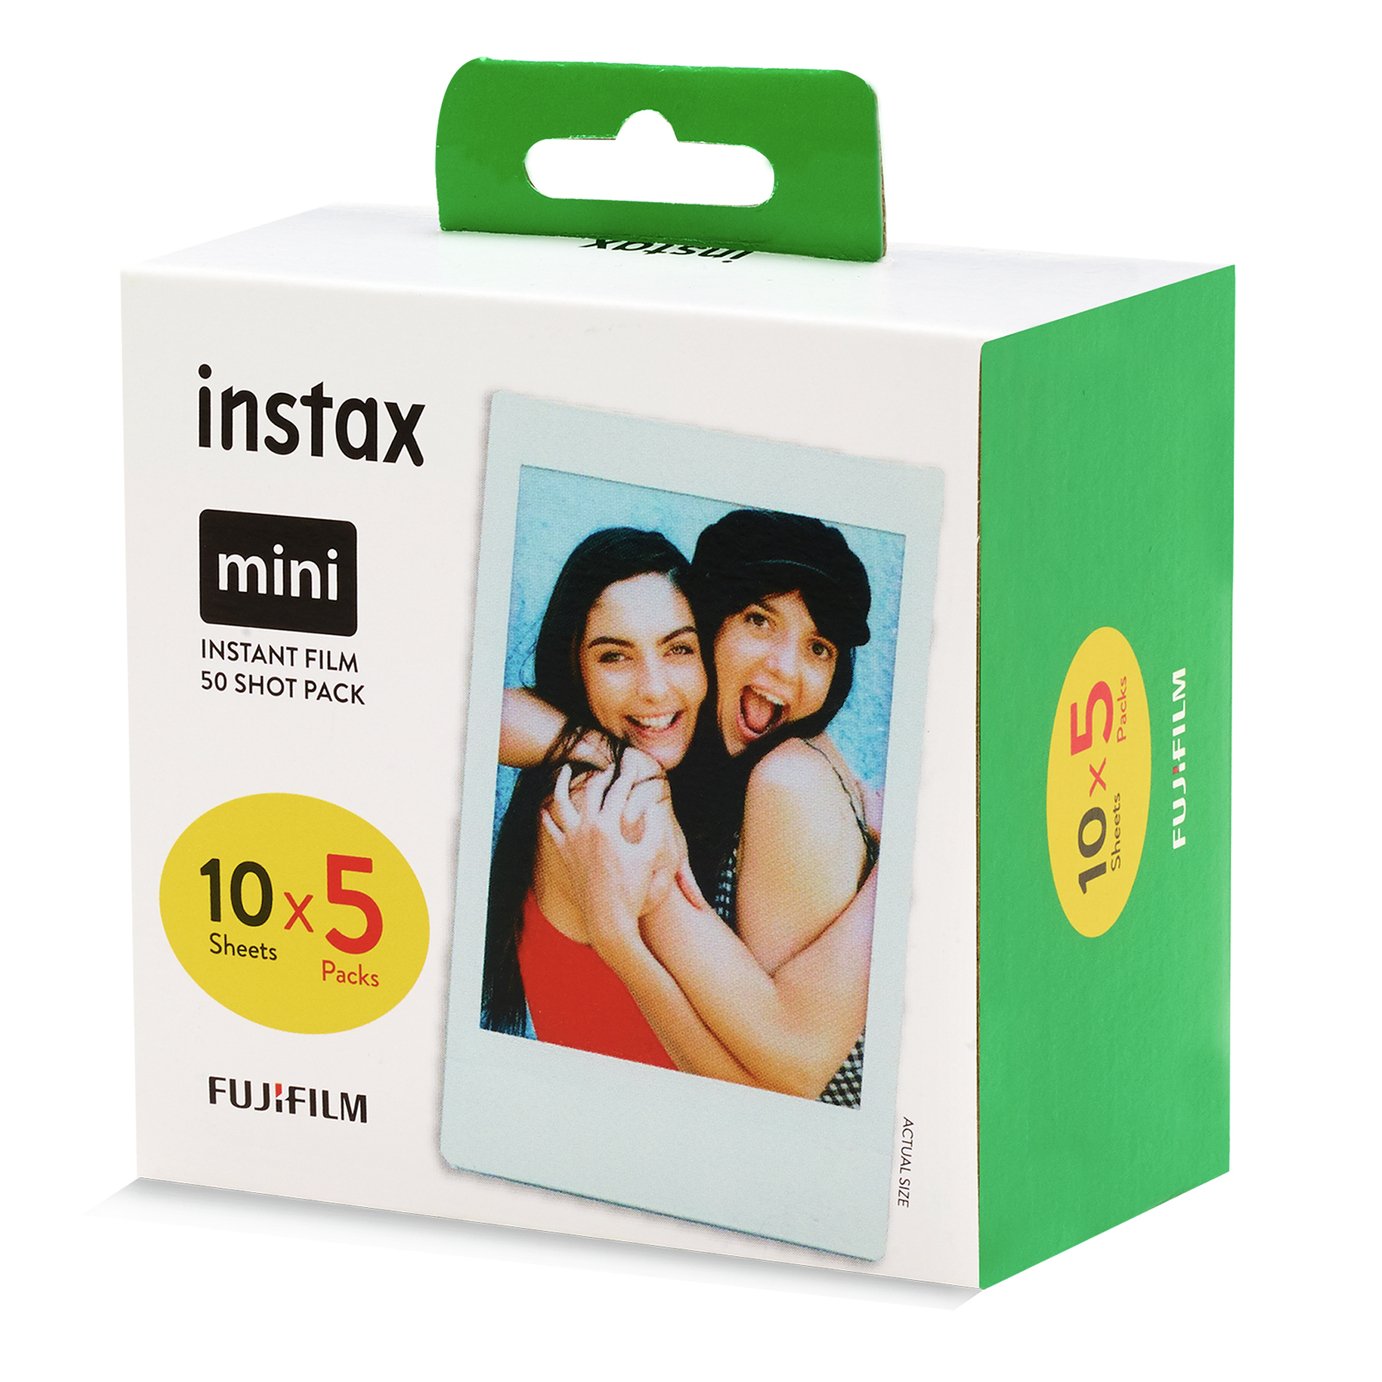 instax Mini Film 50 Shot Pack Review